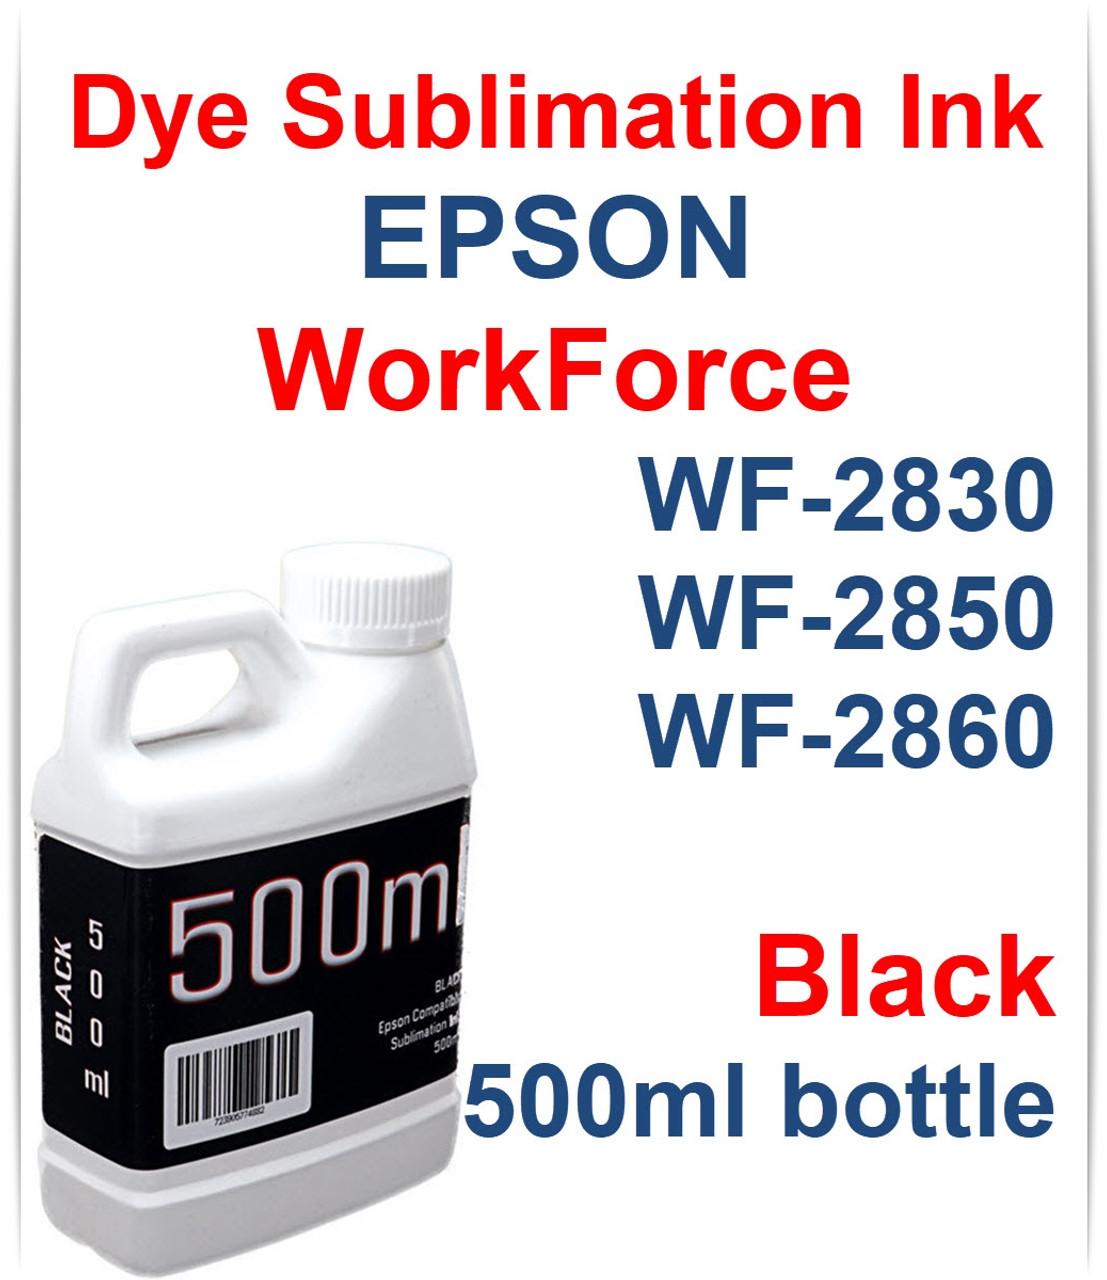 Black 500ml bottle Dye Sublimation Ink for Epson WorkForce WF-2830 WF-2850 WF-2860 Printers